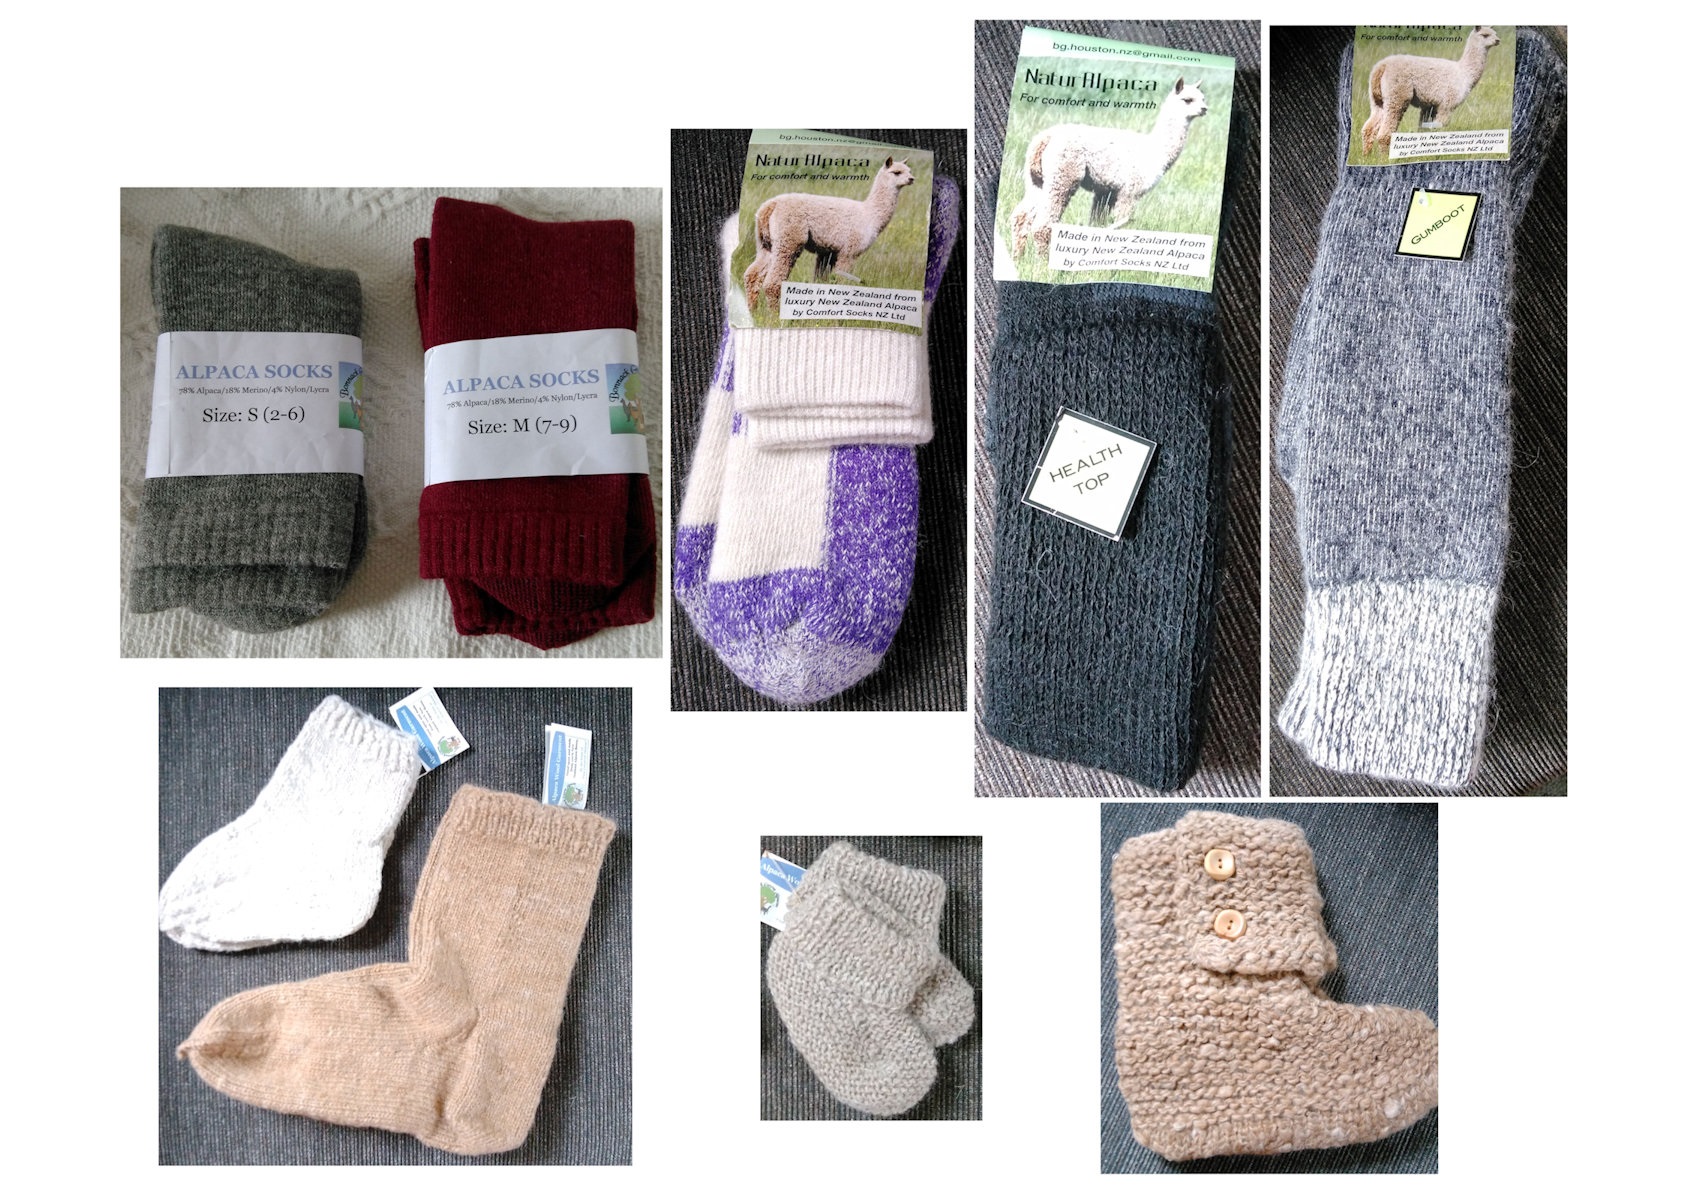 A pair of alpaca socks - Edinburgh Greens' Auction of Promises